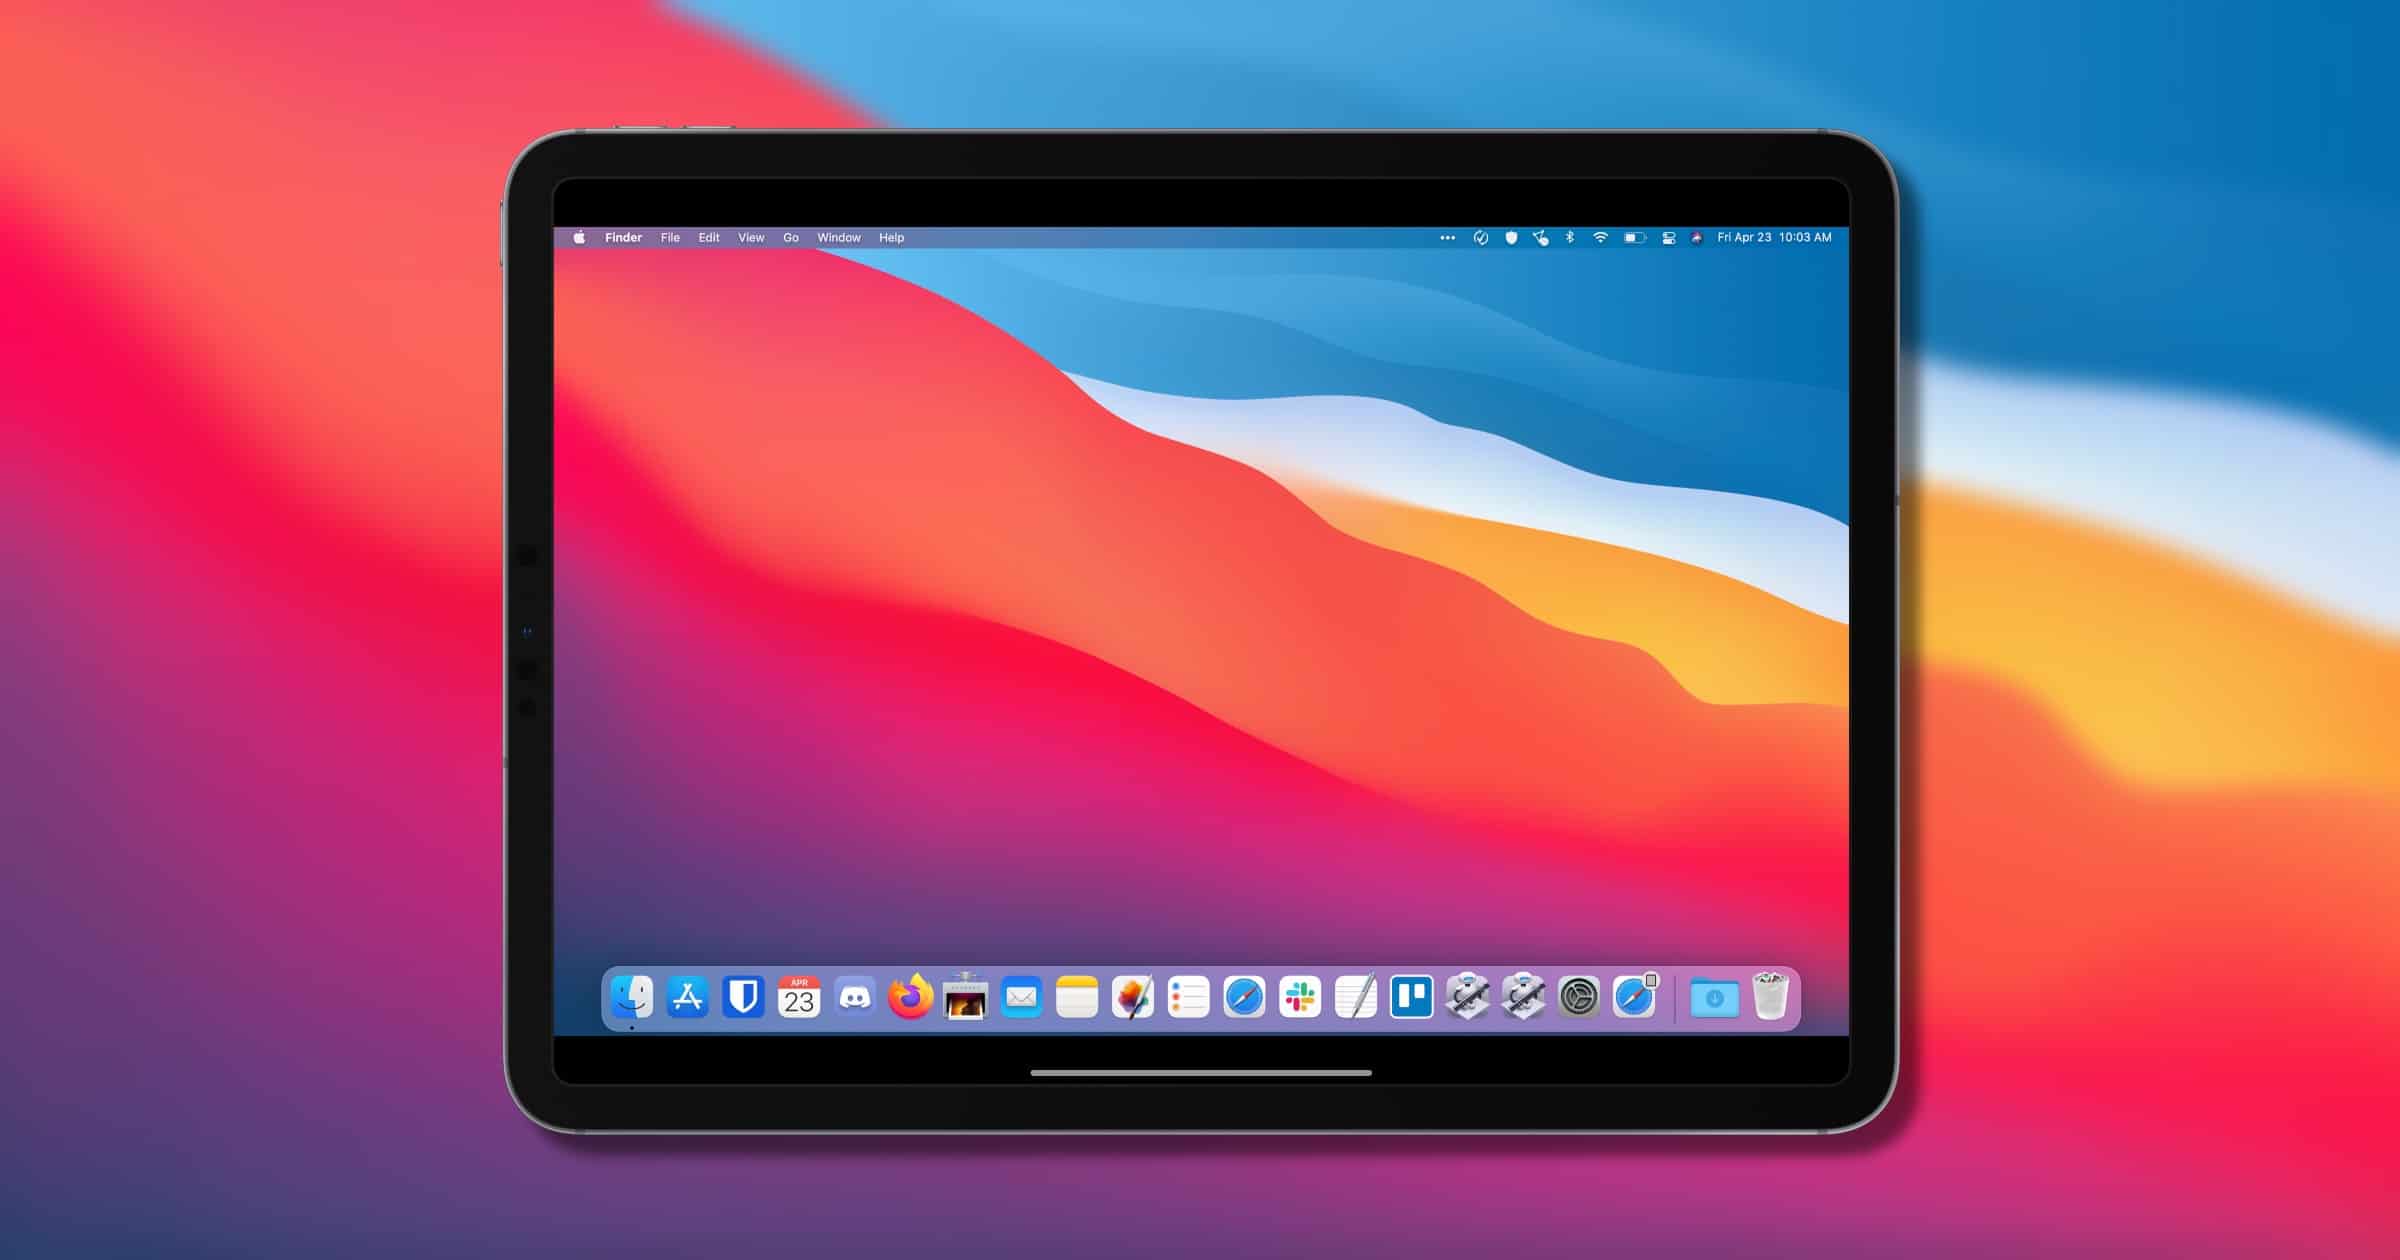 The M1 iPad Pro is Not Getting macOS, Says Greg Joswiak